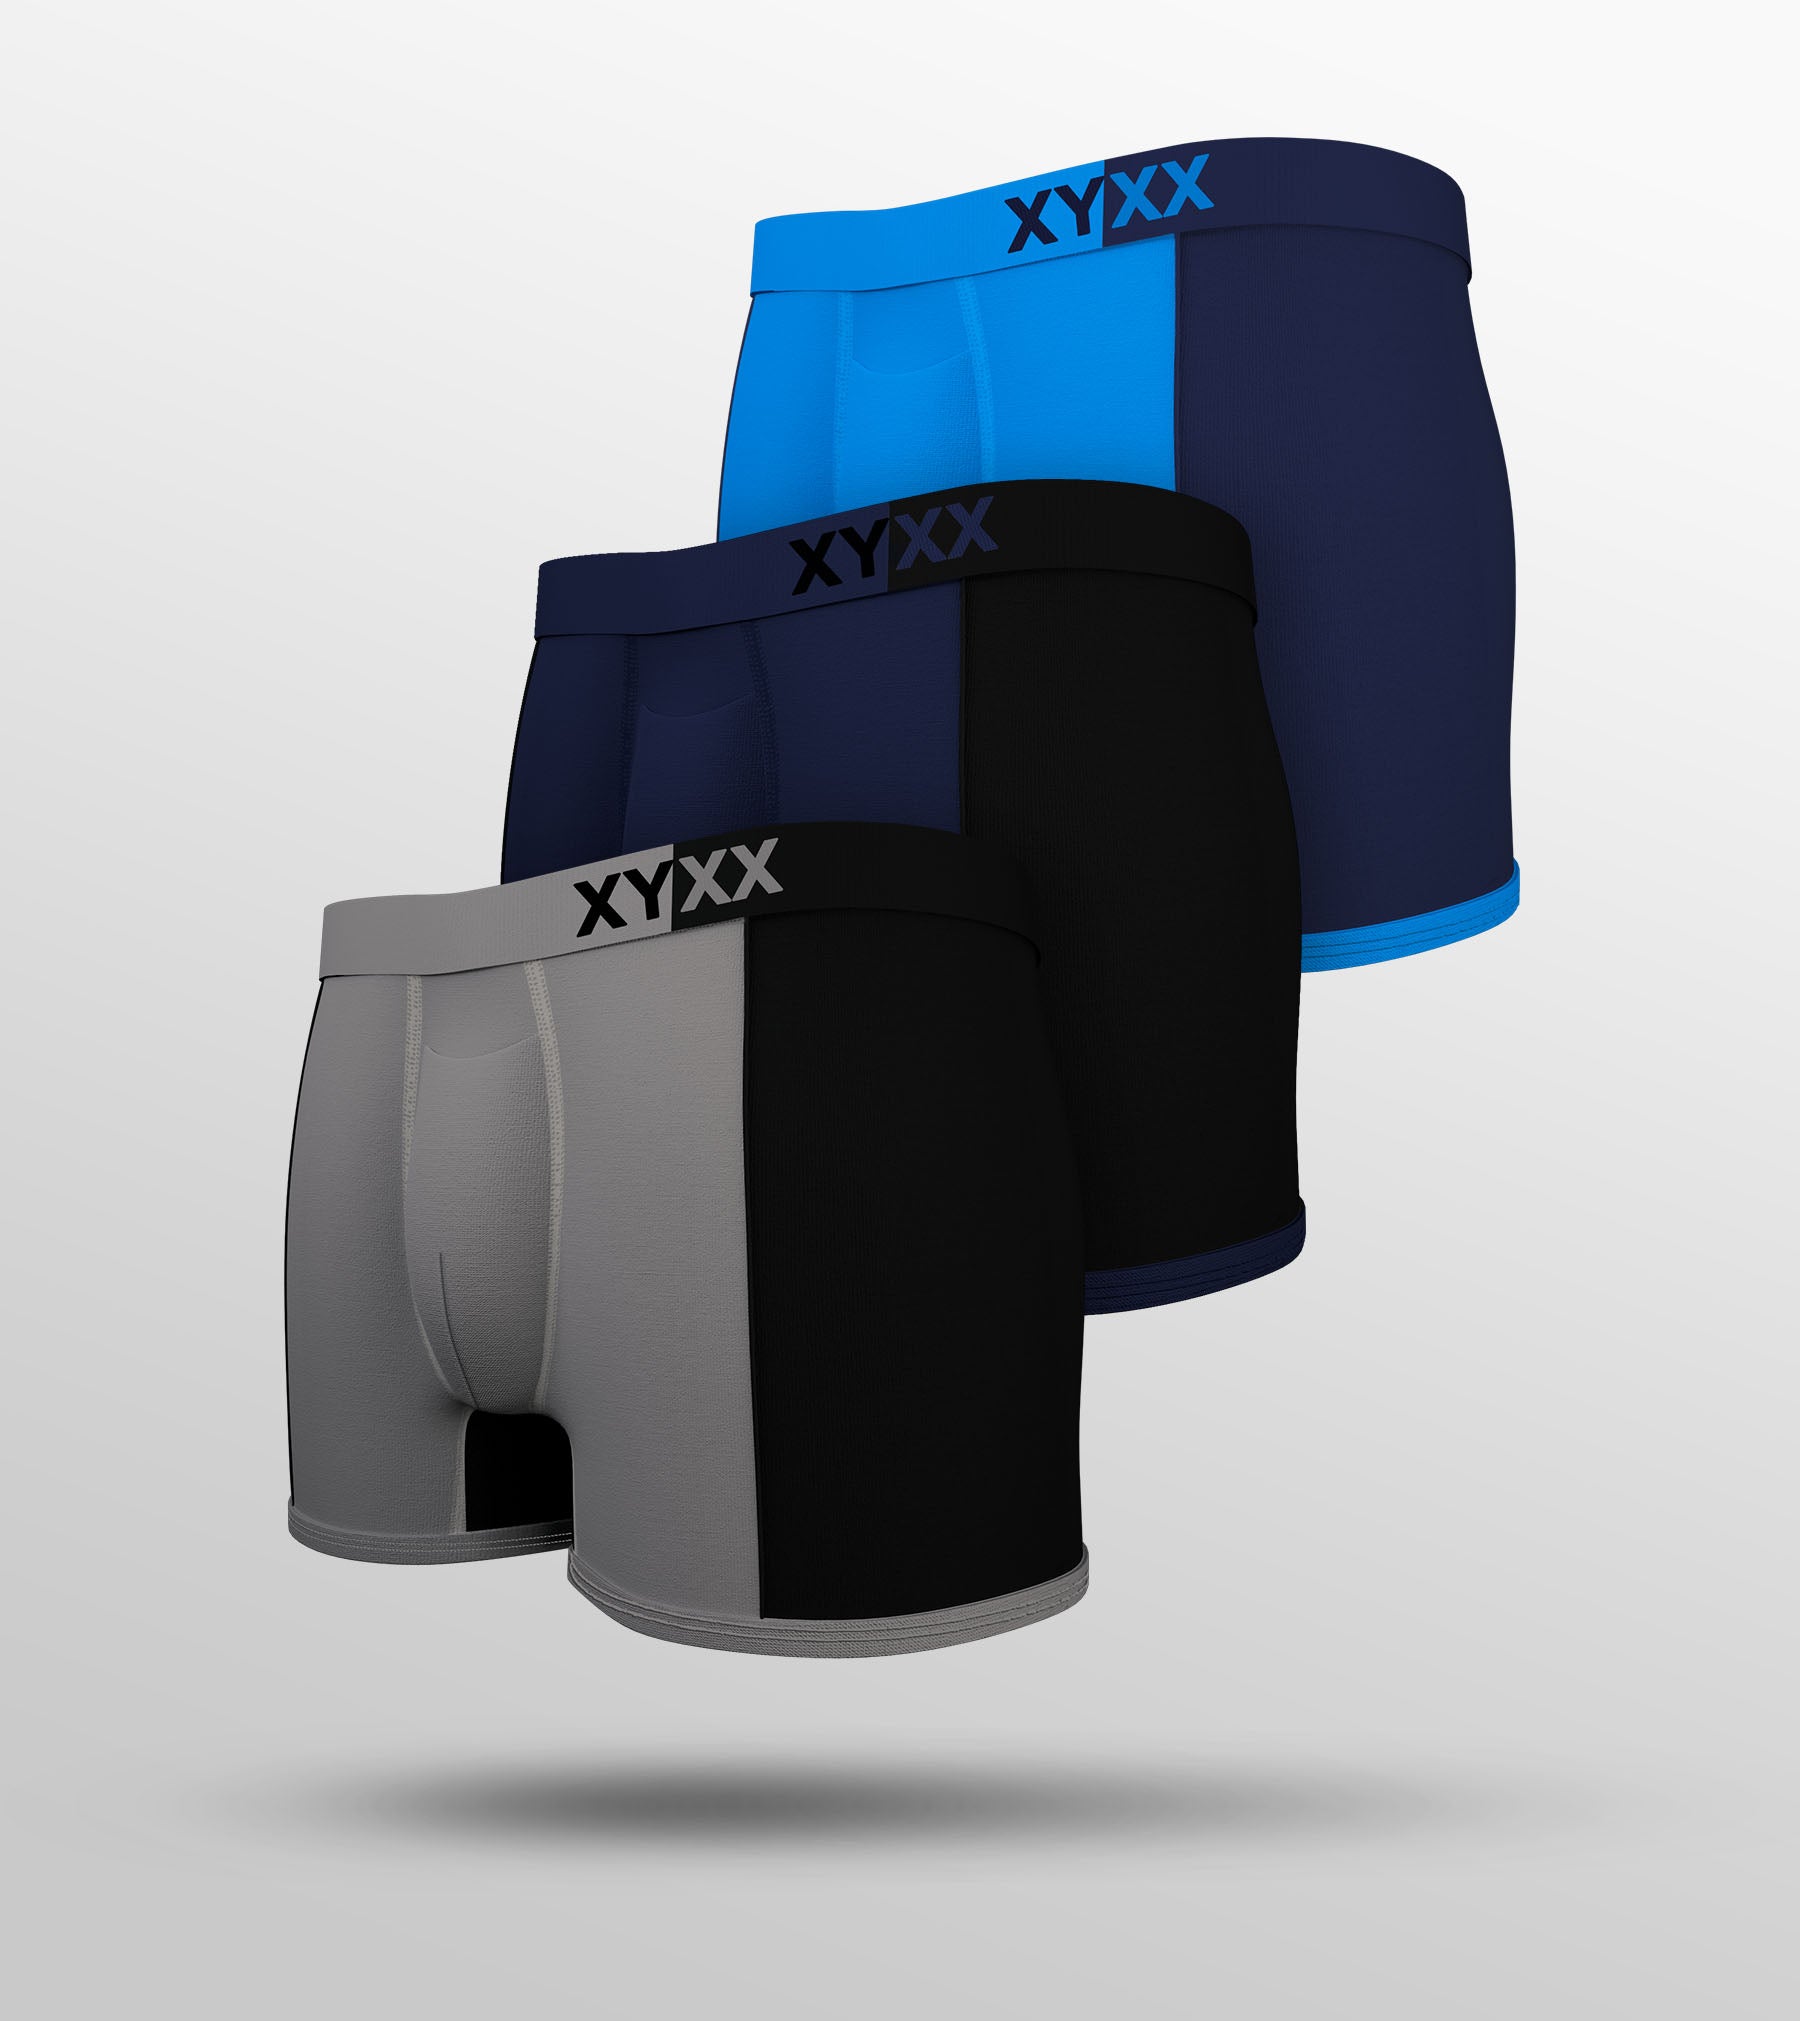 Dualist Modal Trunks For Men Pack of 3 (Grey, Dark Blue, Blue) -  XYXX Mens Apparels